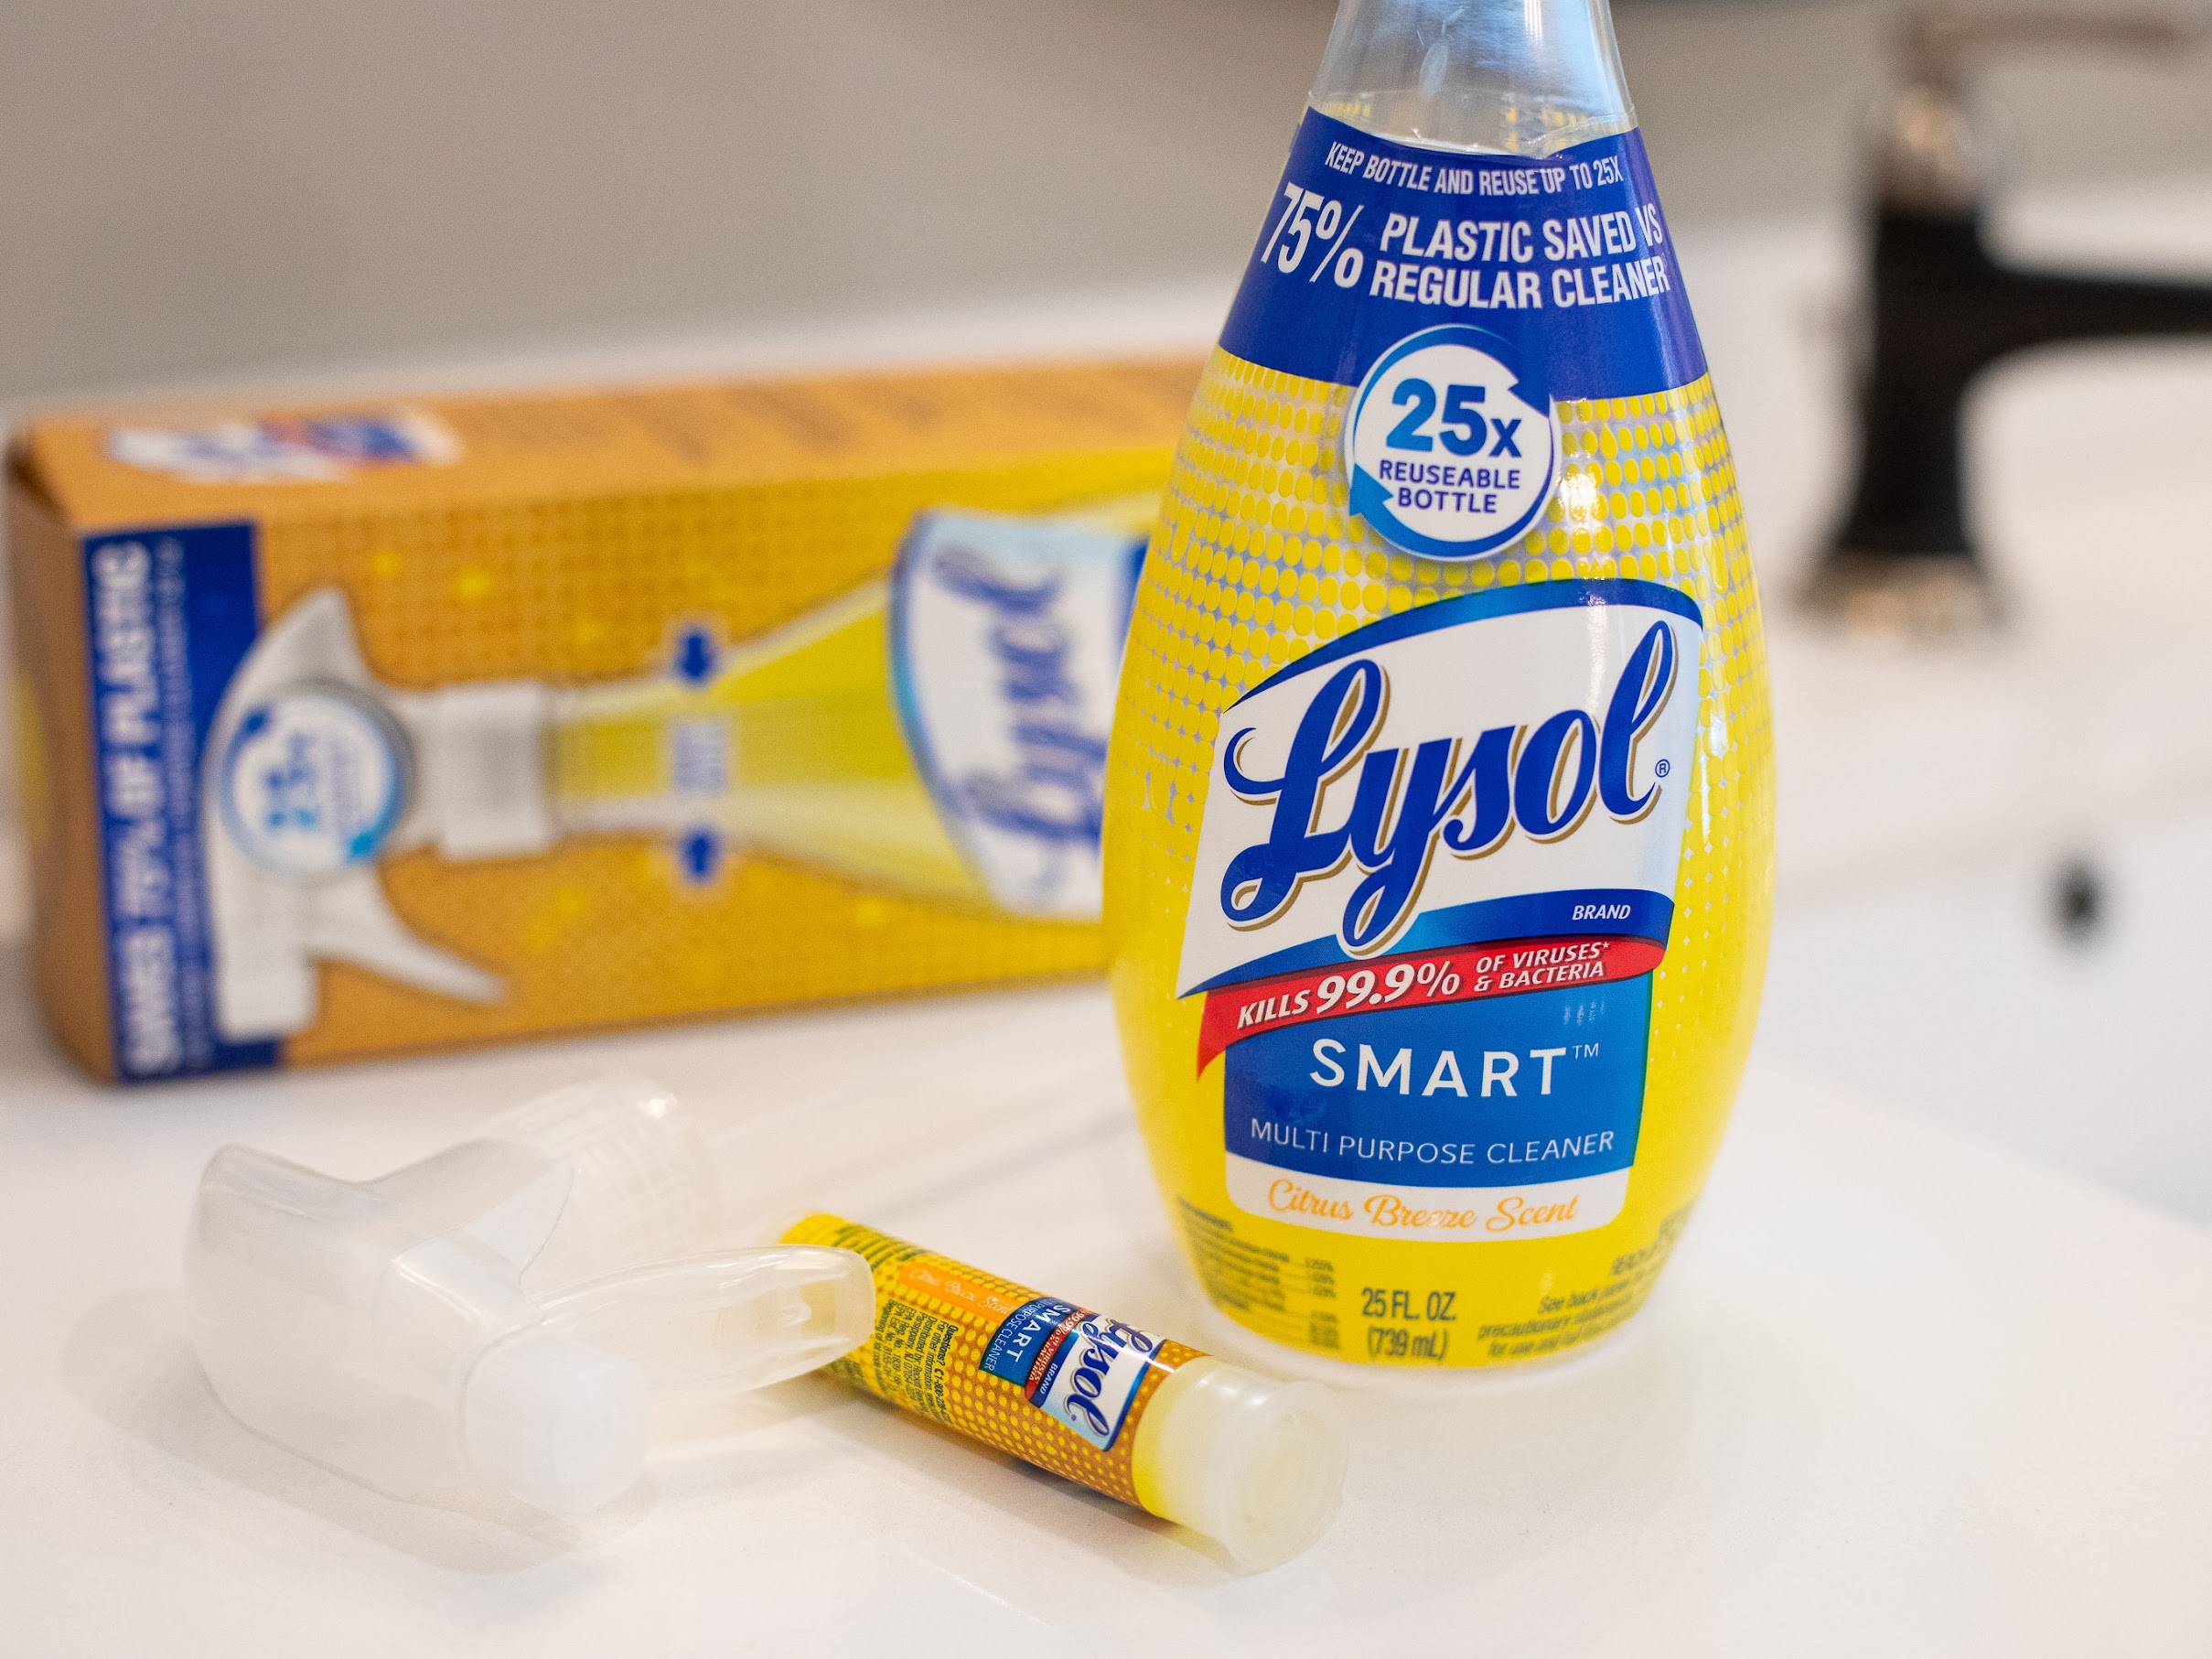 Lysol Smart Multi Purpose Cleaner Starter Kit As Low As $1.75 At Publix – Plus Cheap Refills